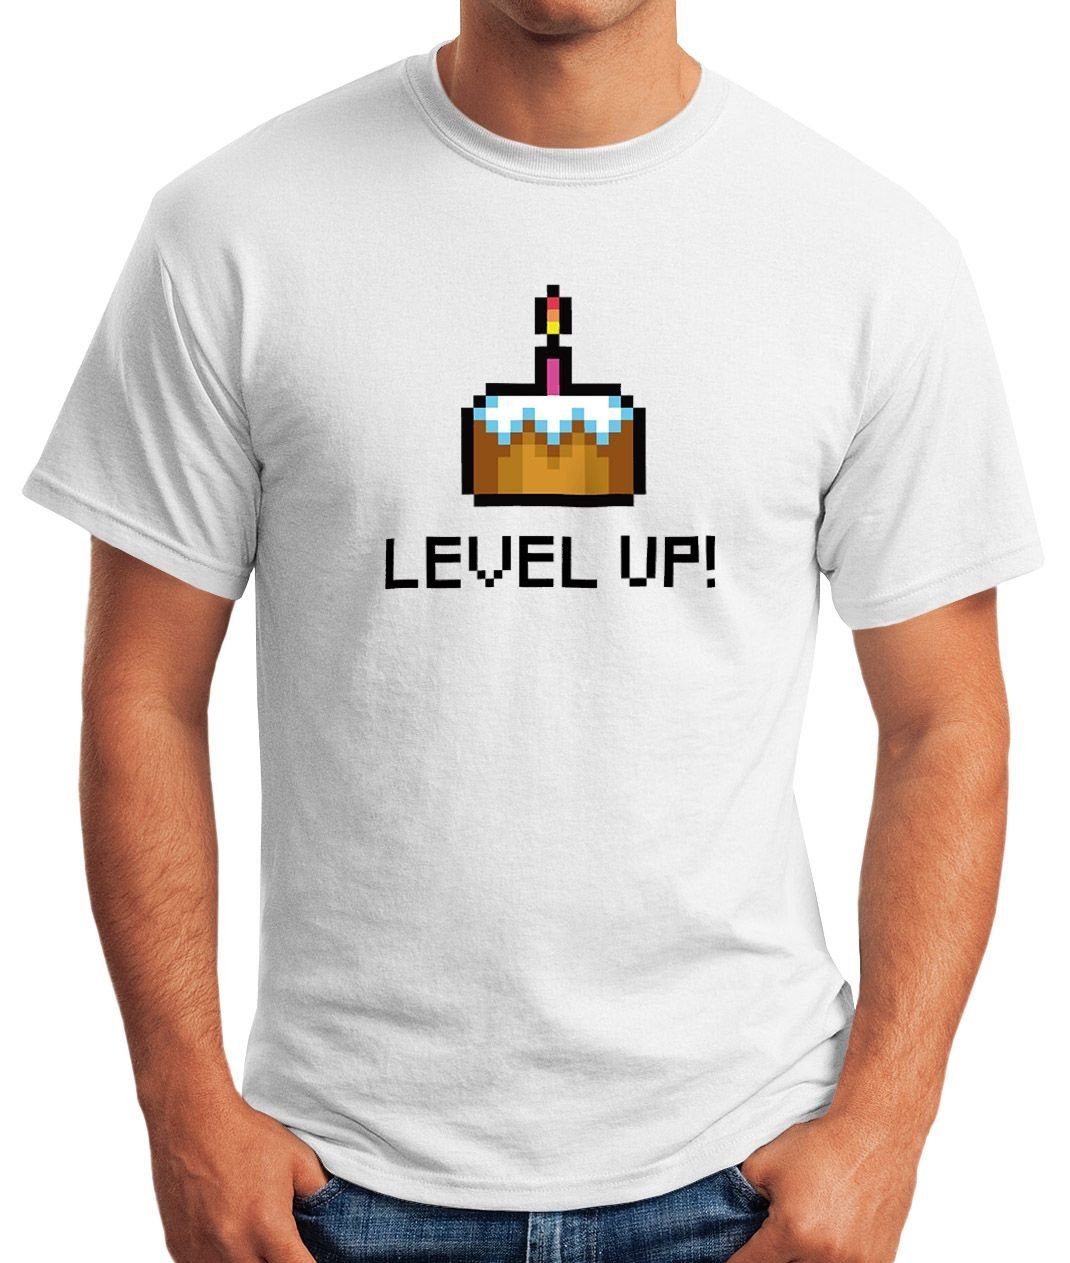 Herren Pixel-Torte Up Retro Print-Shirt Geburtstag Geschenk Fun-Shirt Arcade Moonworks® weiß MoonWorks Print Gamer Pixelgrafik Level mit T-Shirt